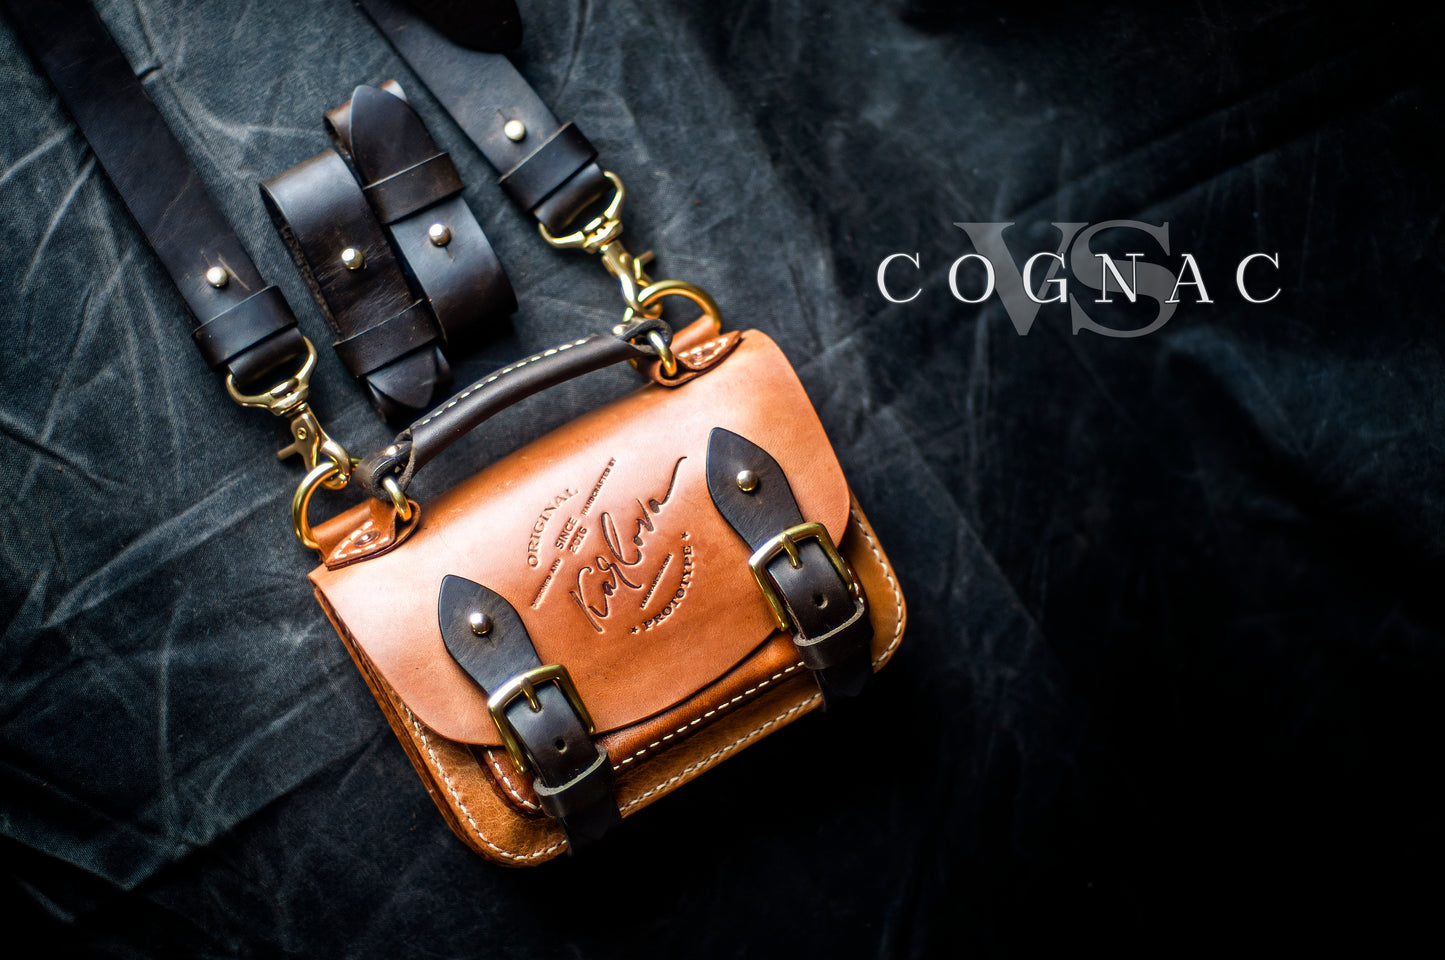 Cognac Series - All 3 Bags